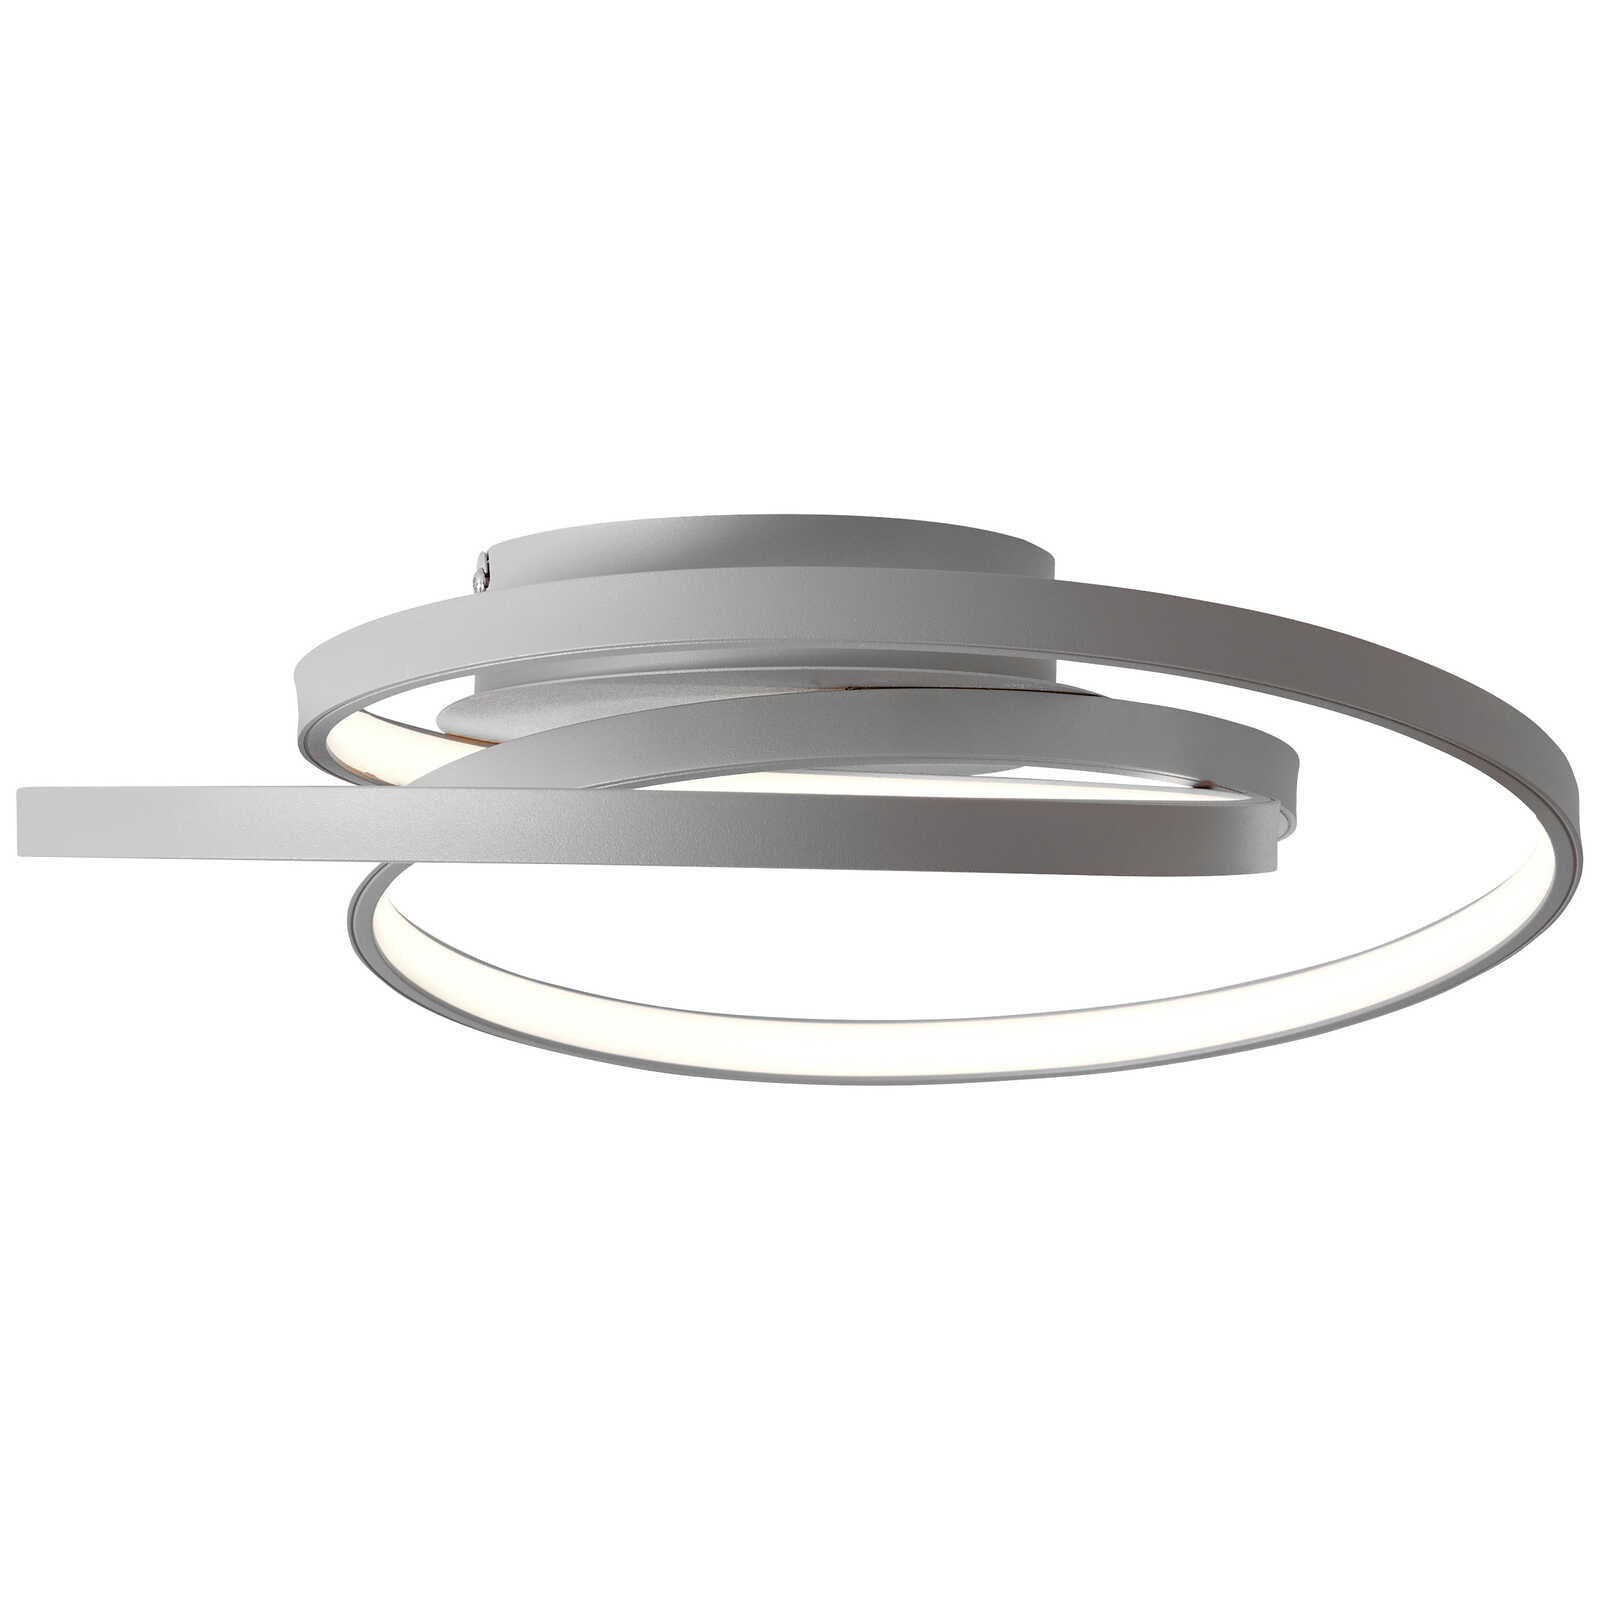             Metal ceiling light - Kilian 2 - Grey
        